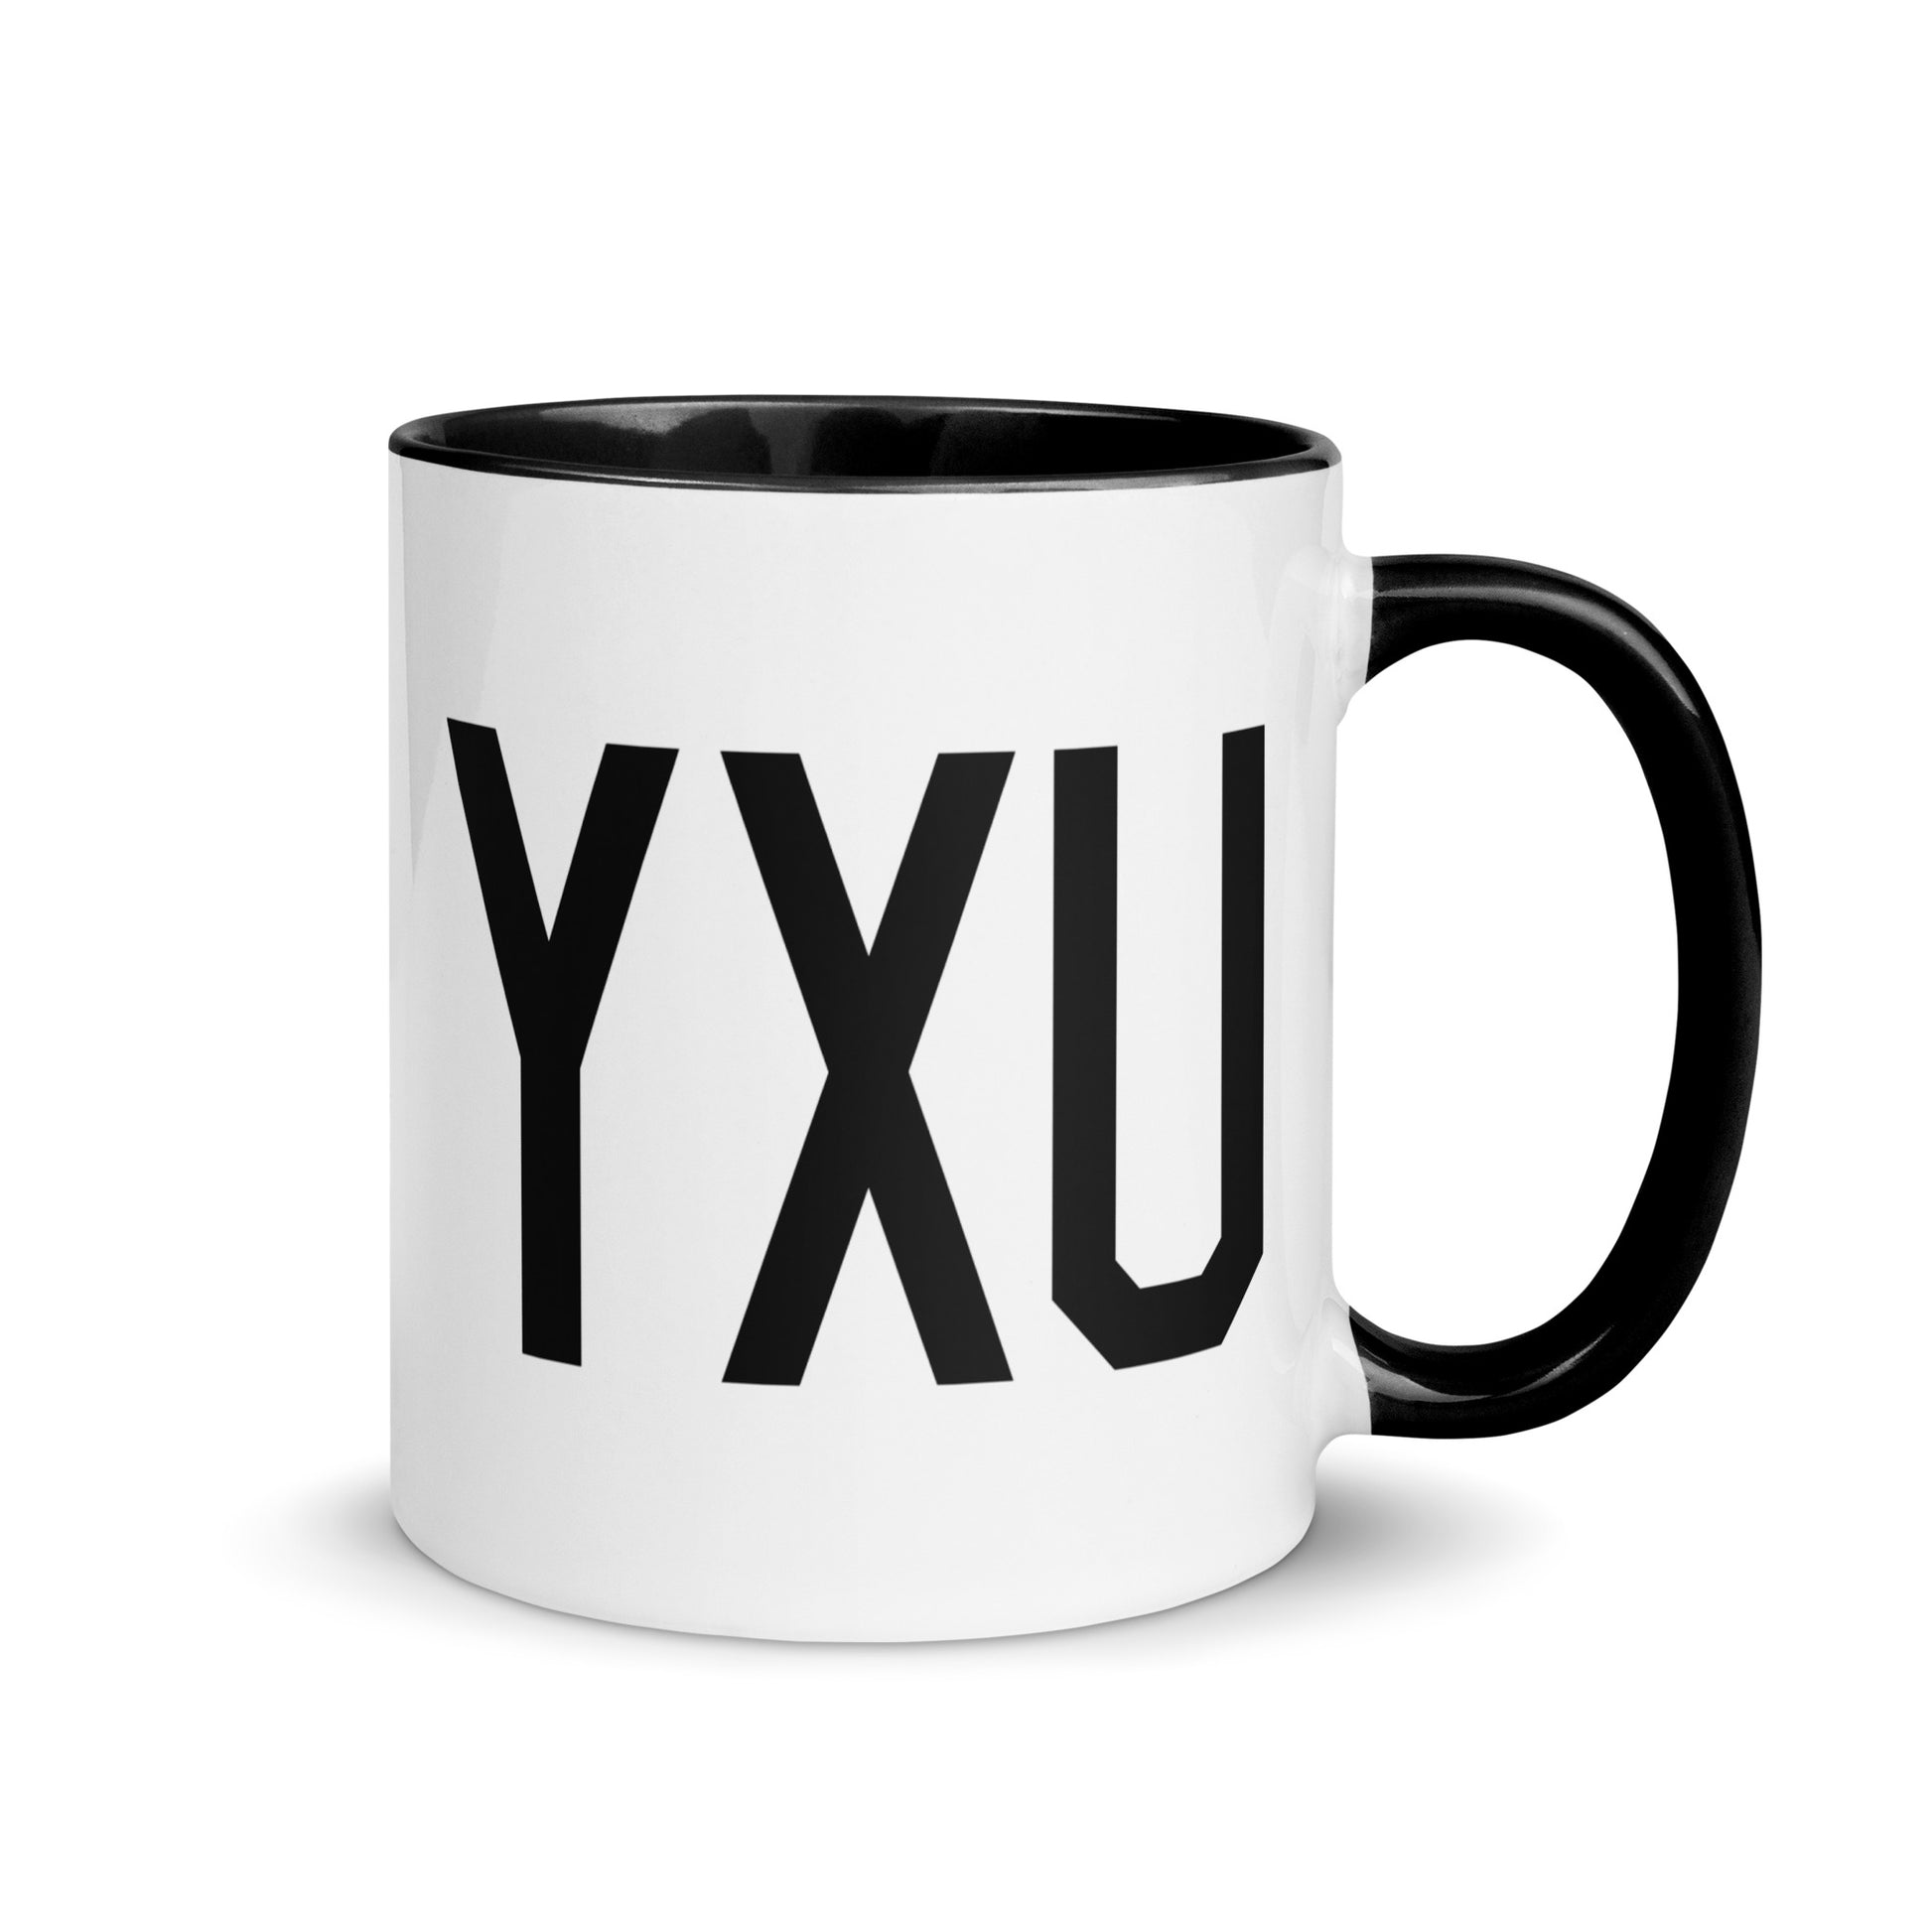 Airport Code Coffee Mug - Black • YXU London • YHM Designs - Image 01